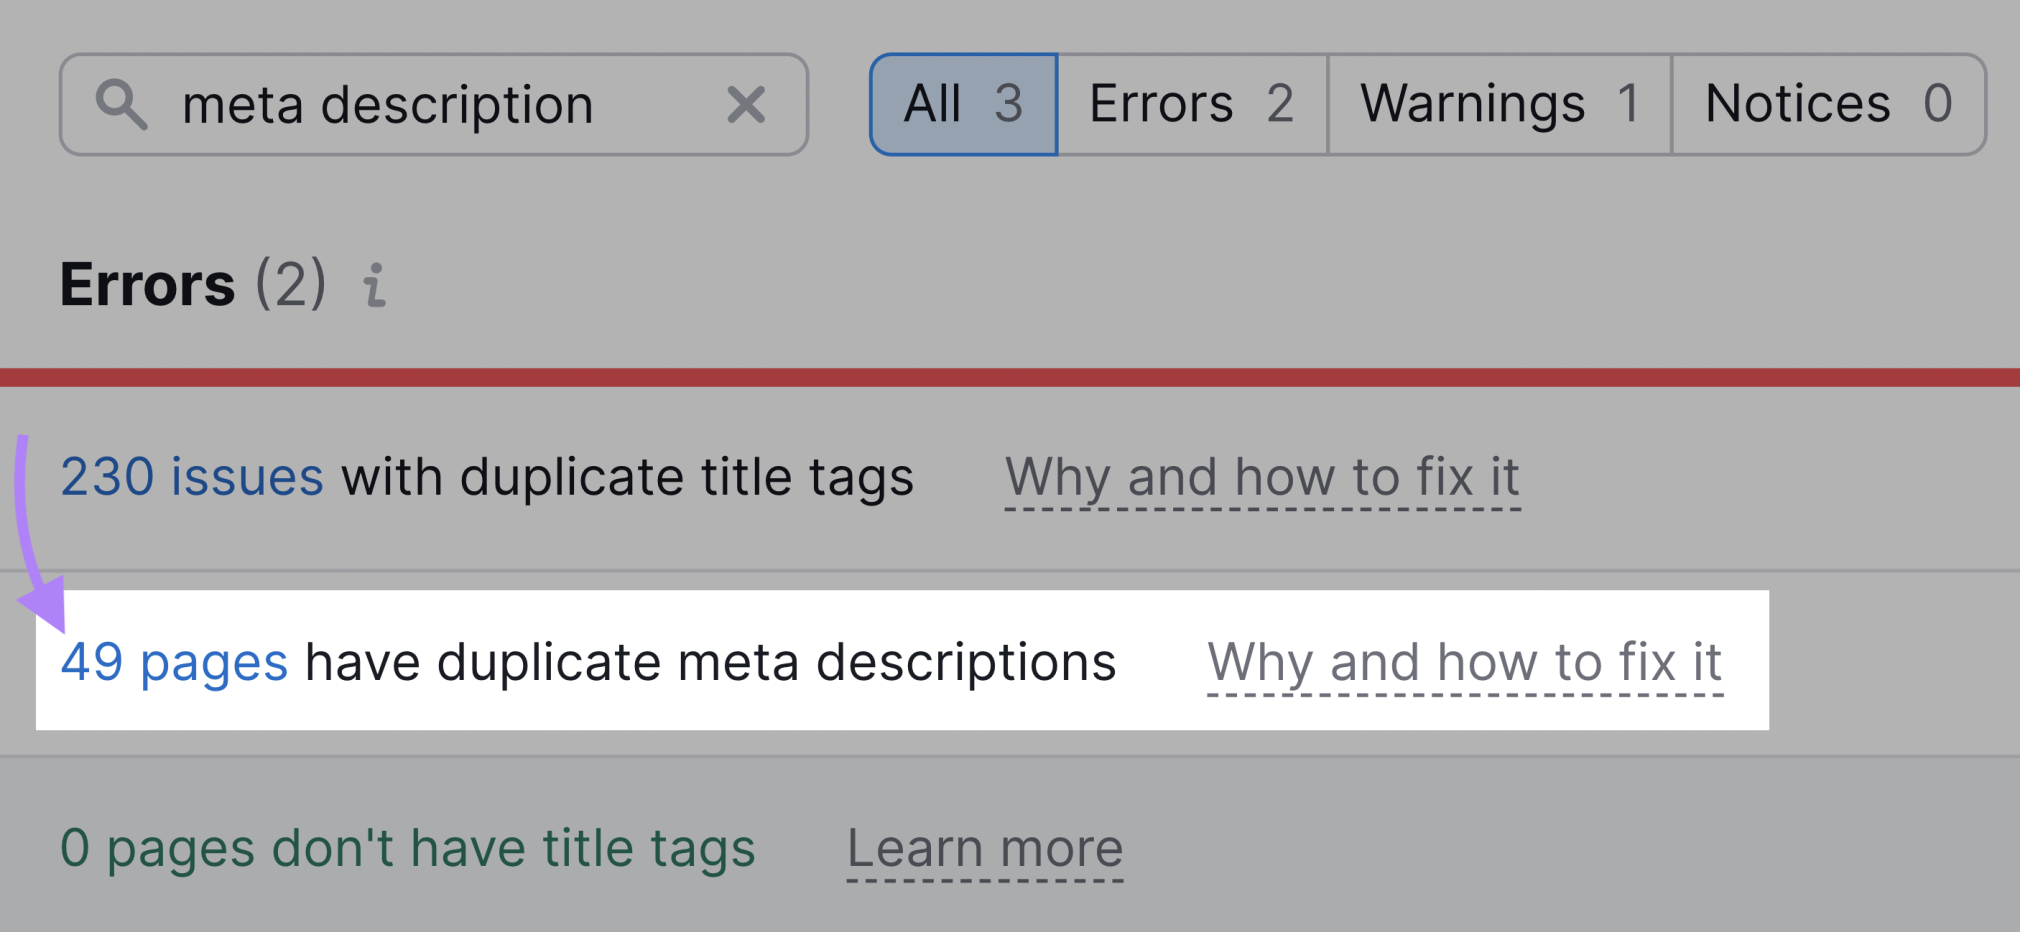 Duplicate meta descriptions error